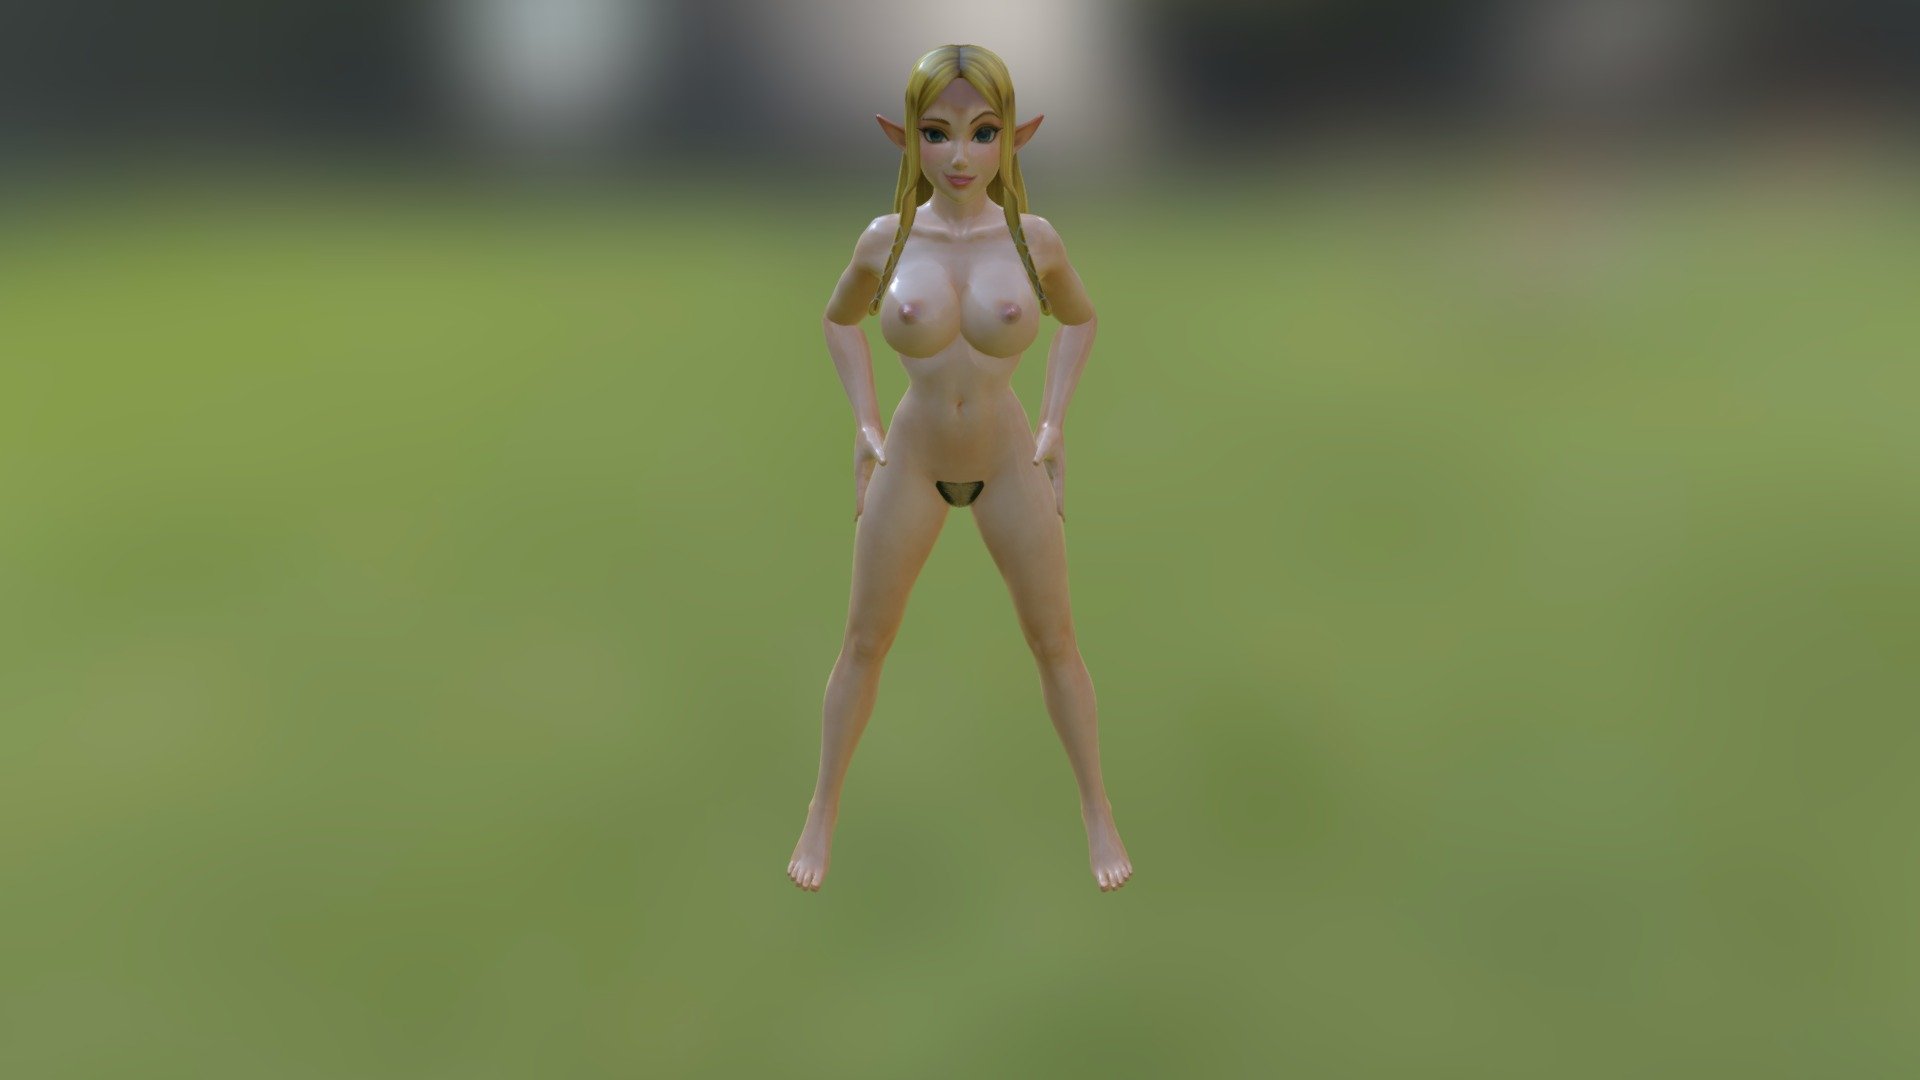 Zelda Williams Nude Photos 2021.